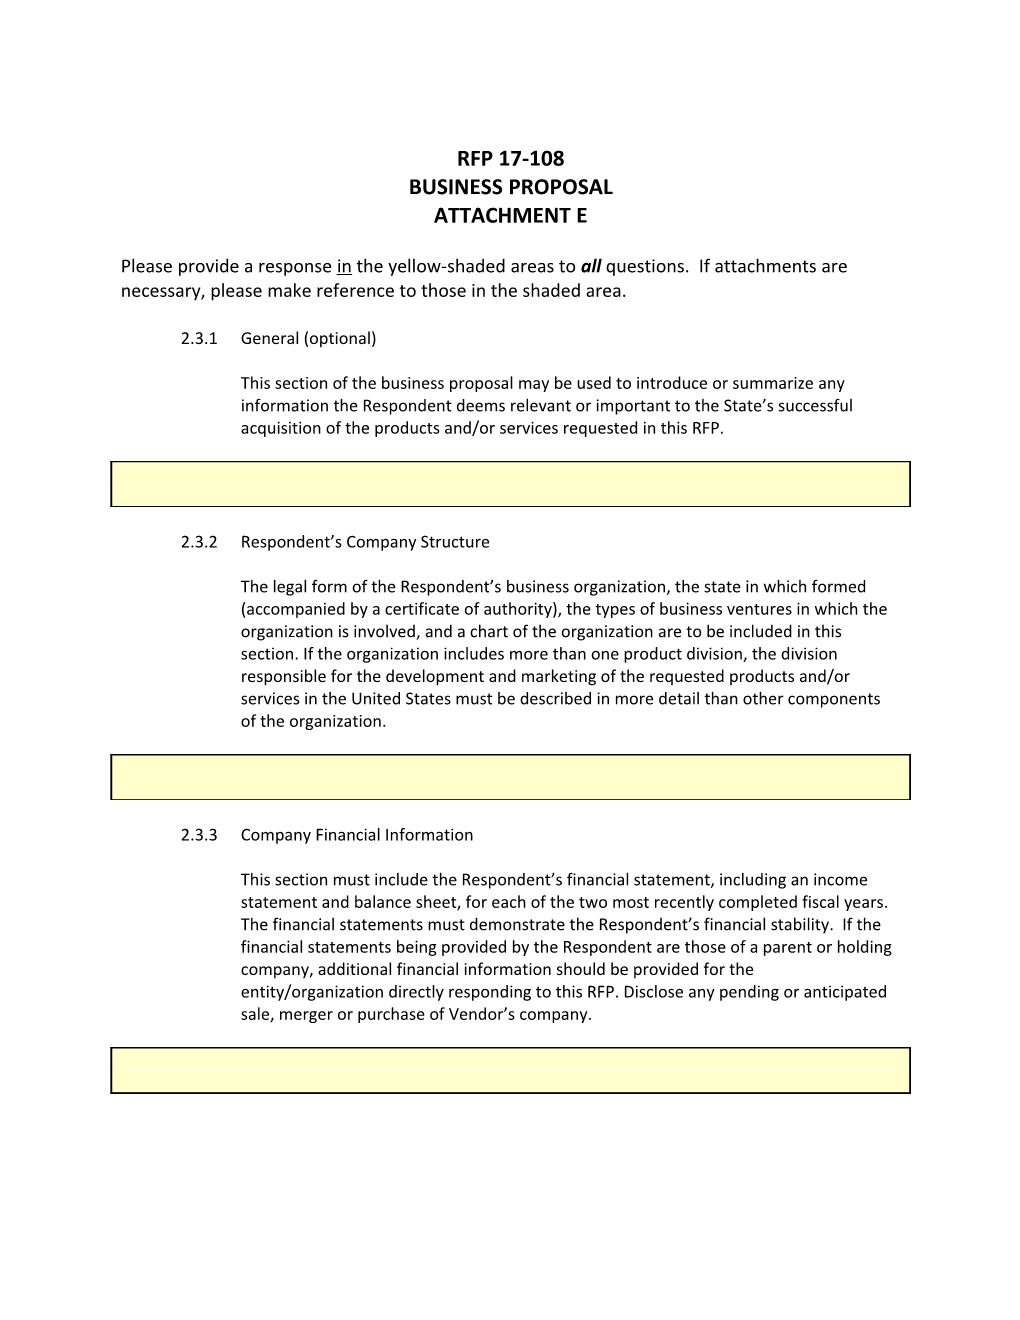 RFP 17-108 Business Proposal Attachment E